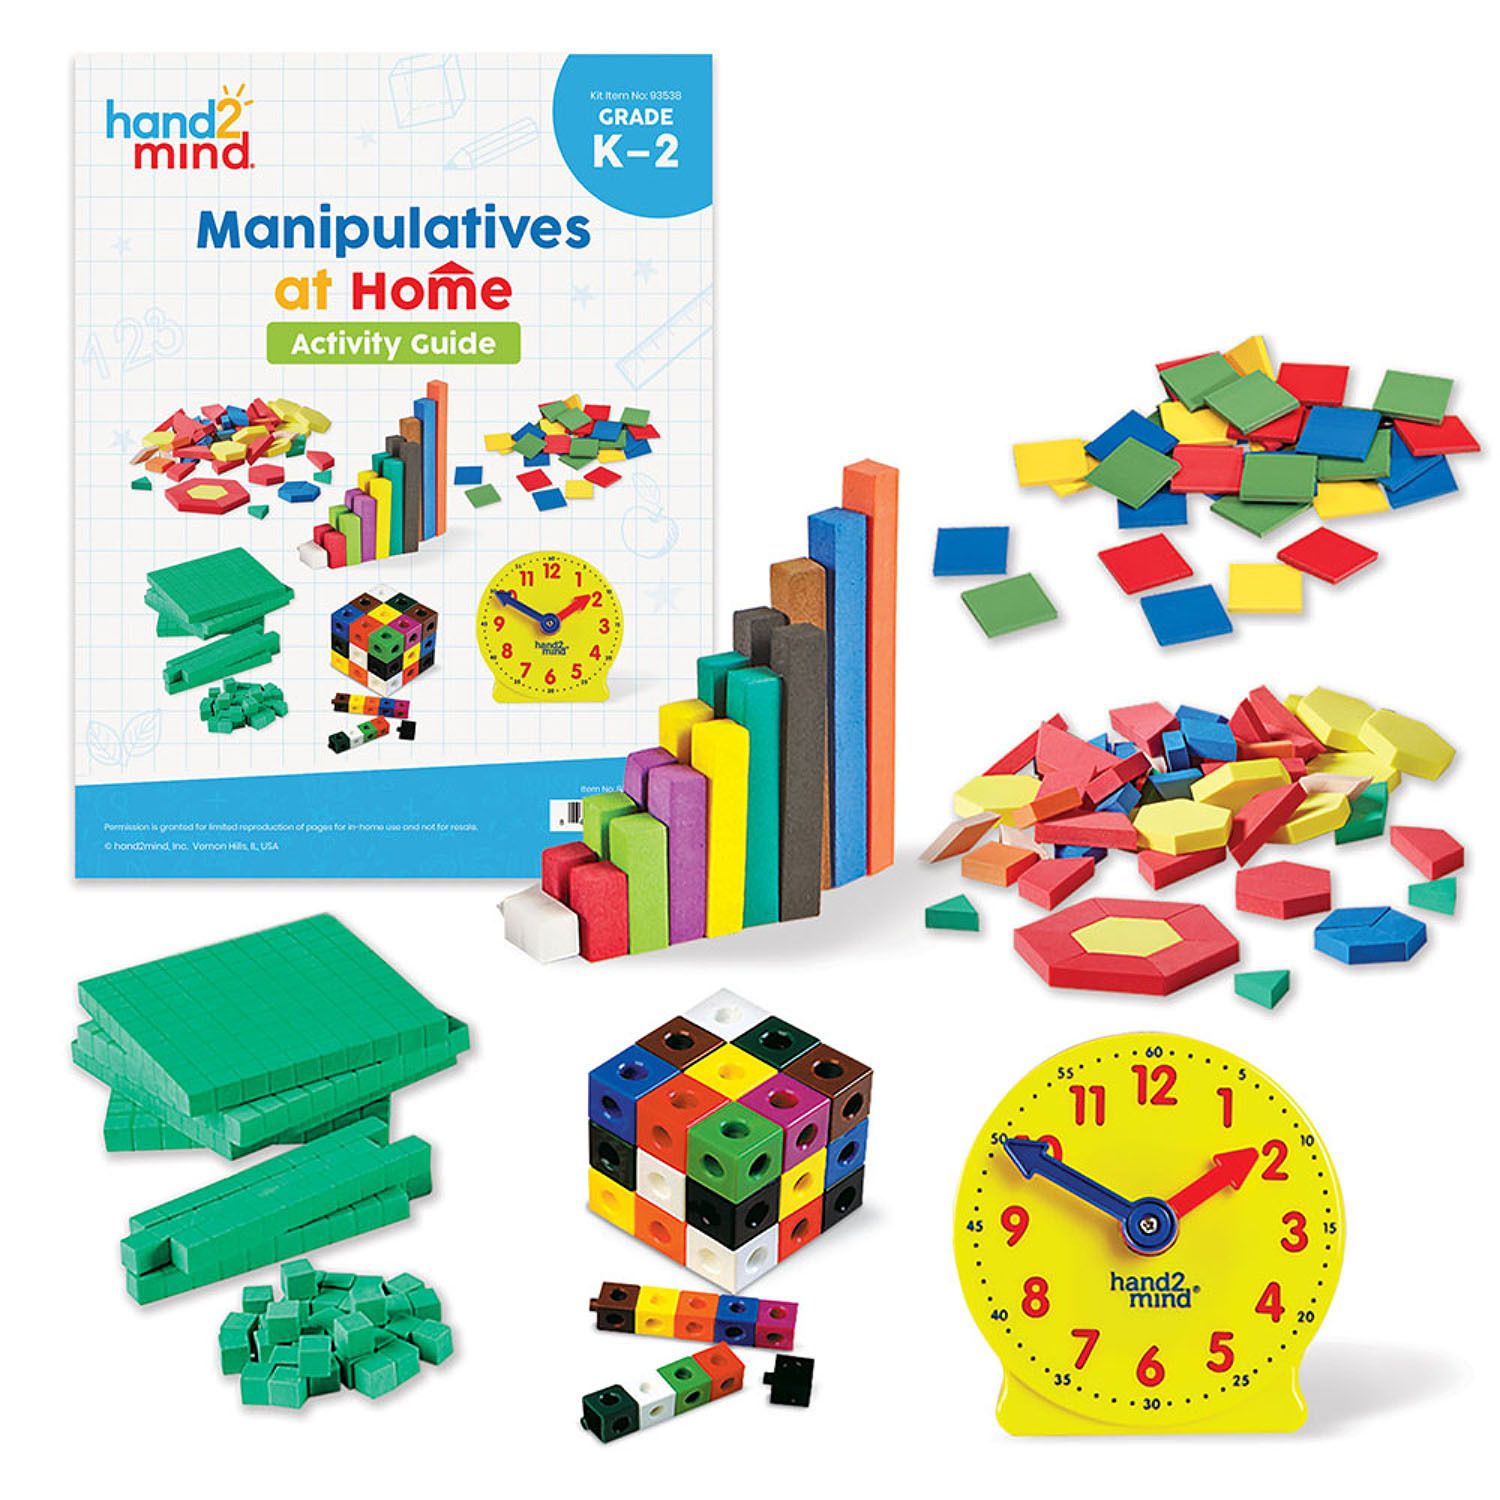 Image for Learning Resources hand2mind Take Home Manipulative Kit (Grades K-2) at Kohl's.